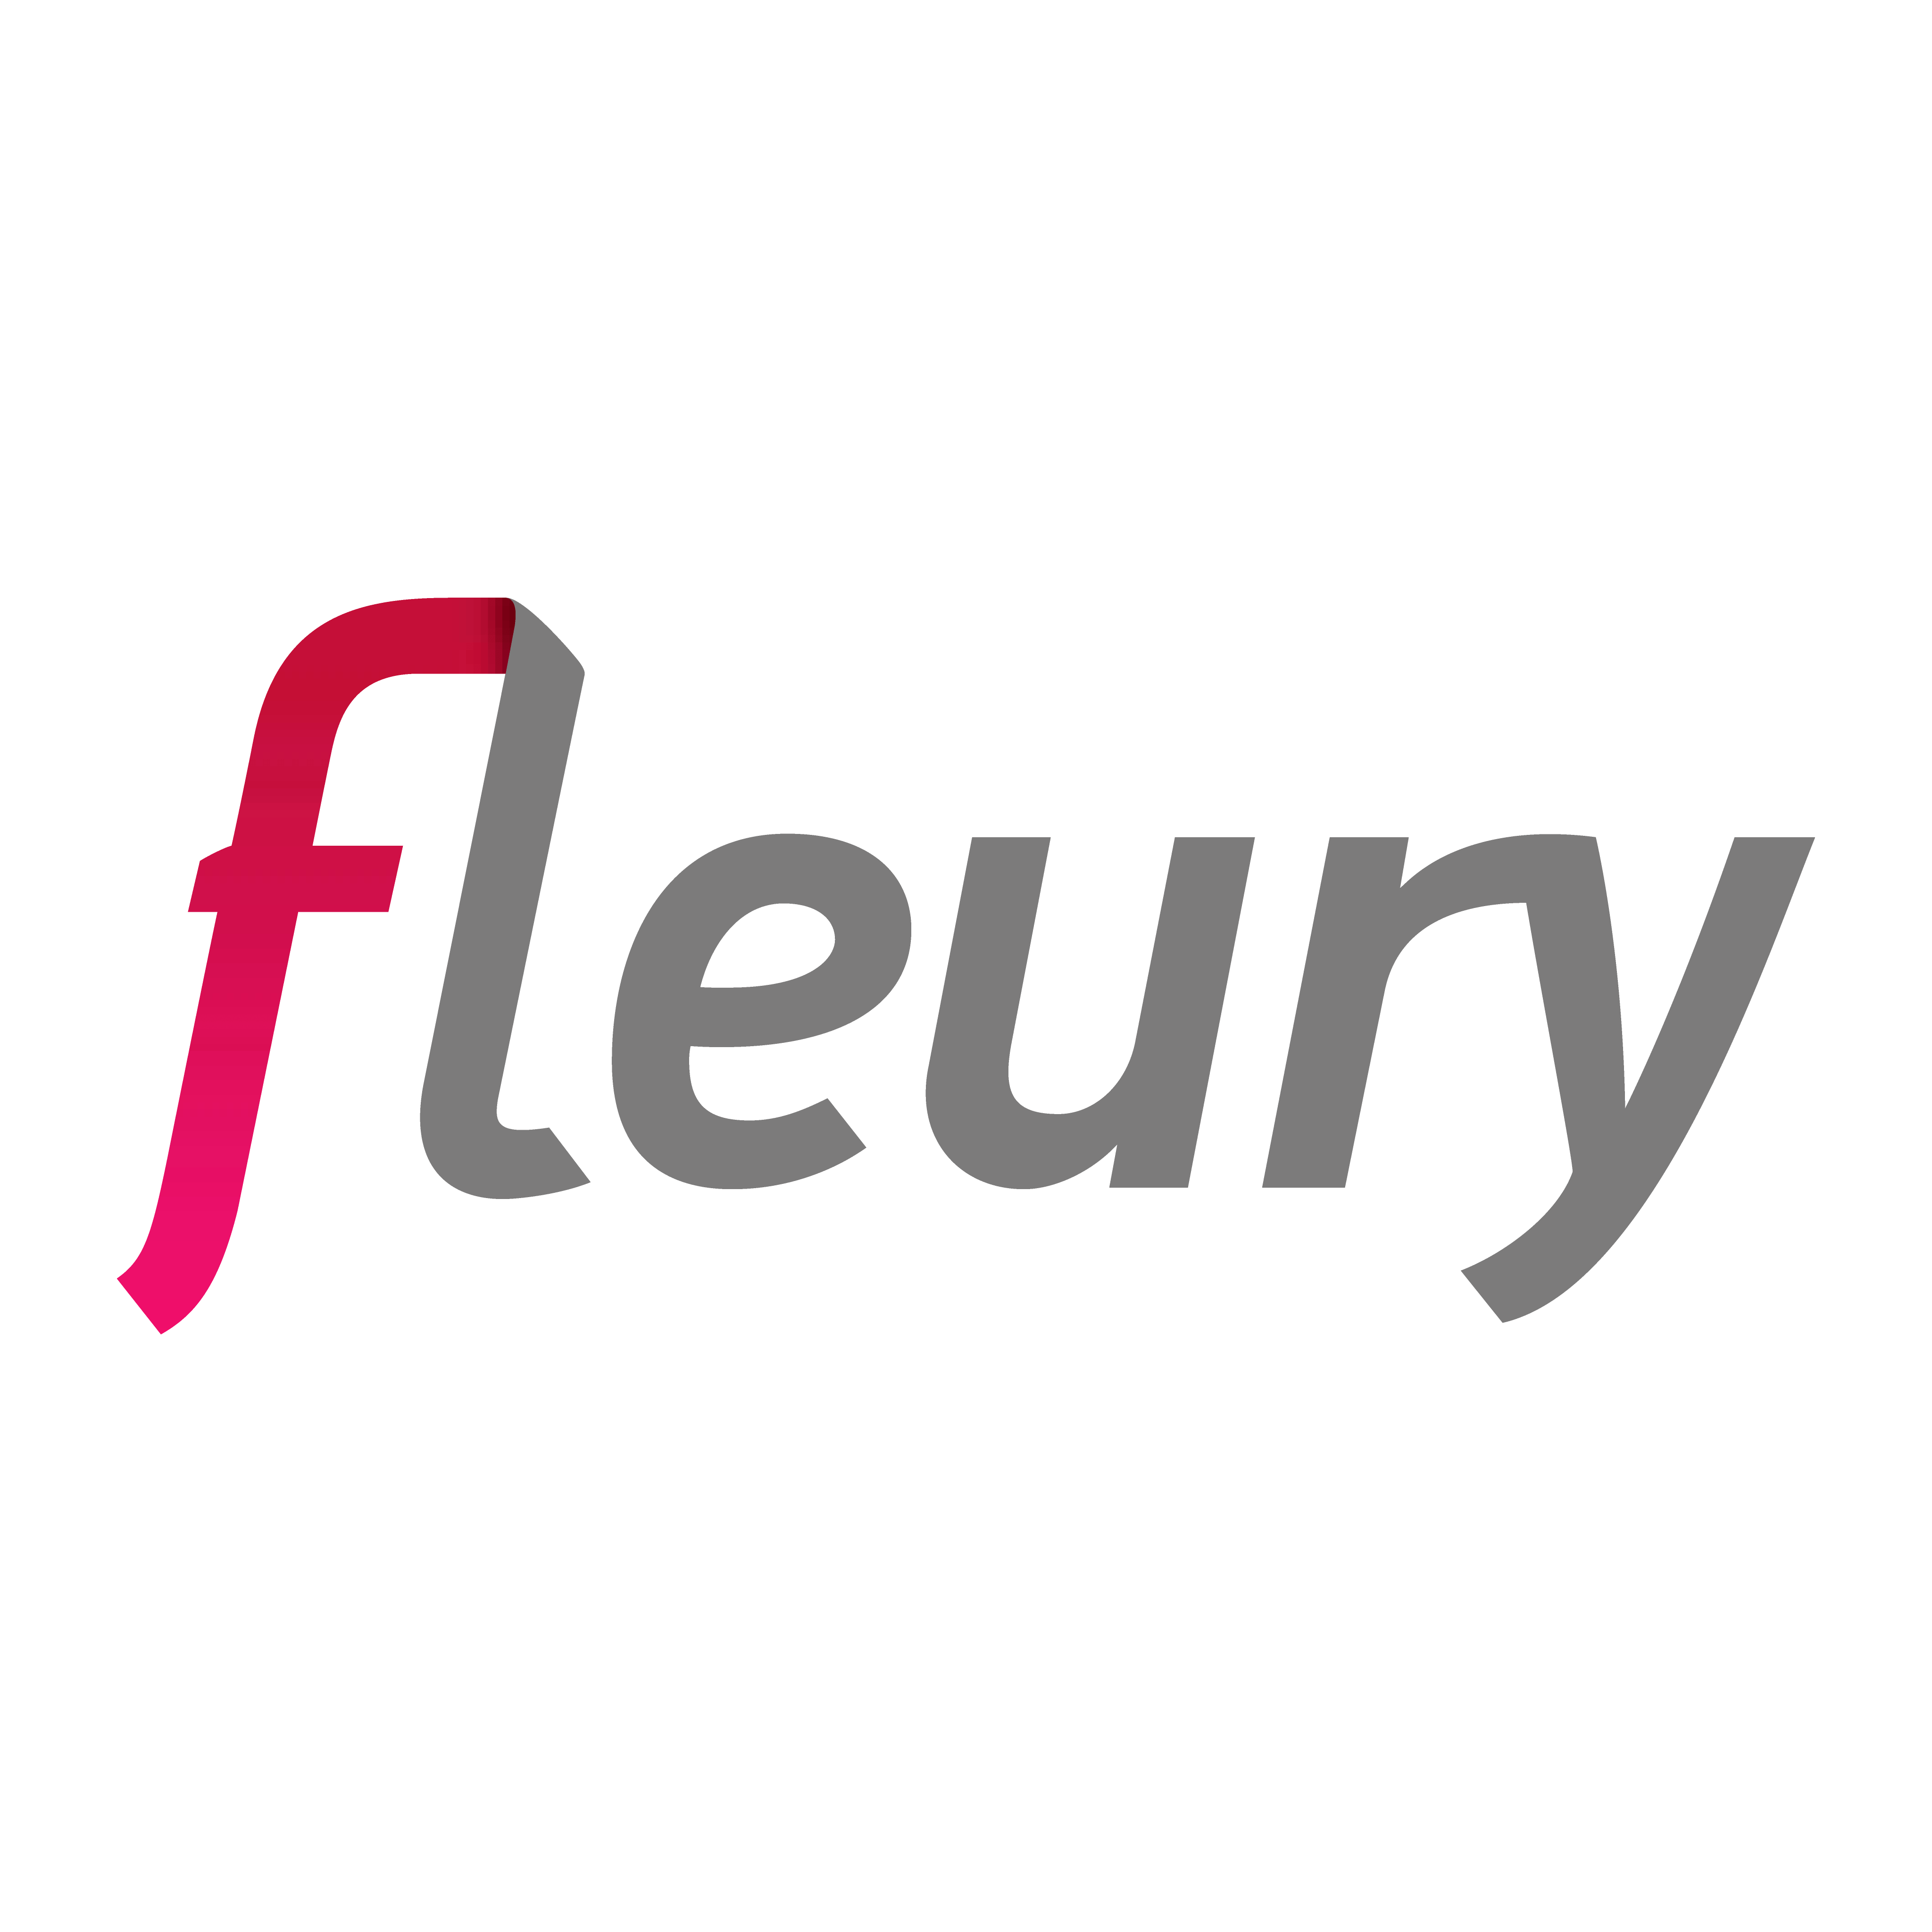 Laboratório Fleury